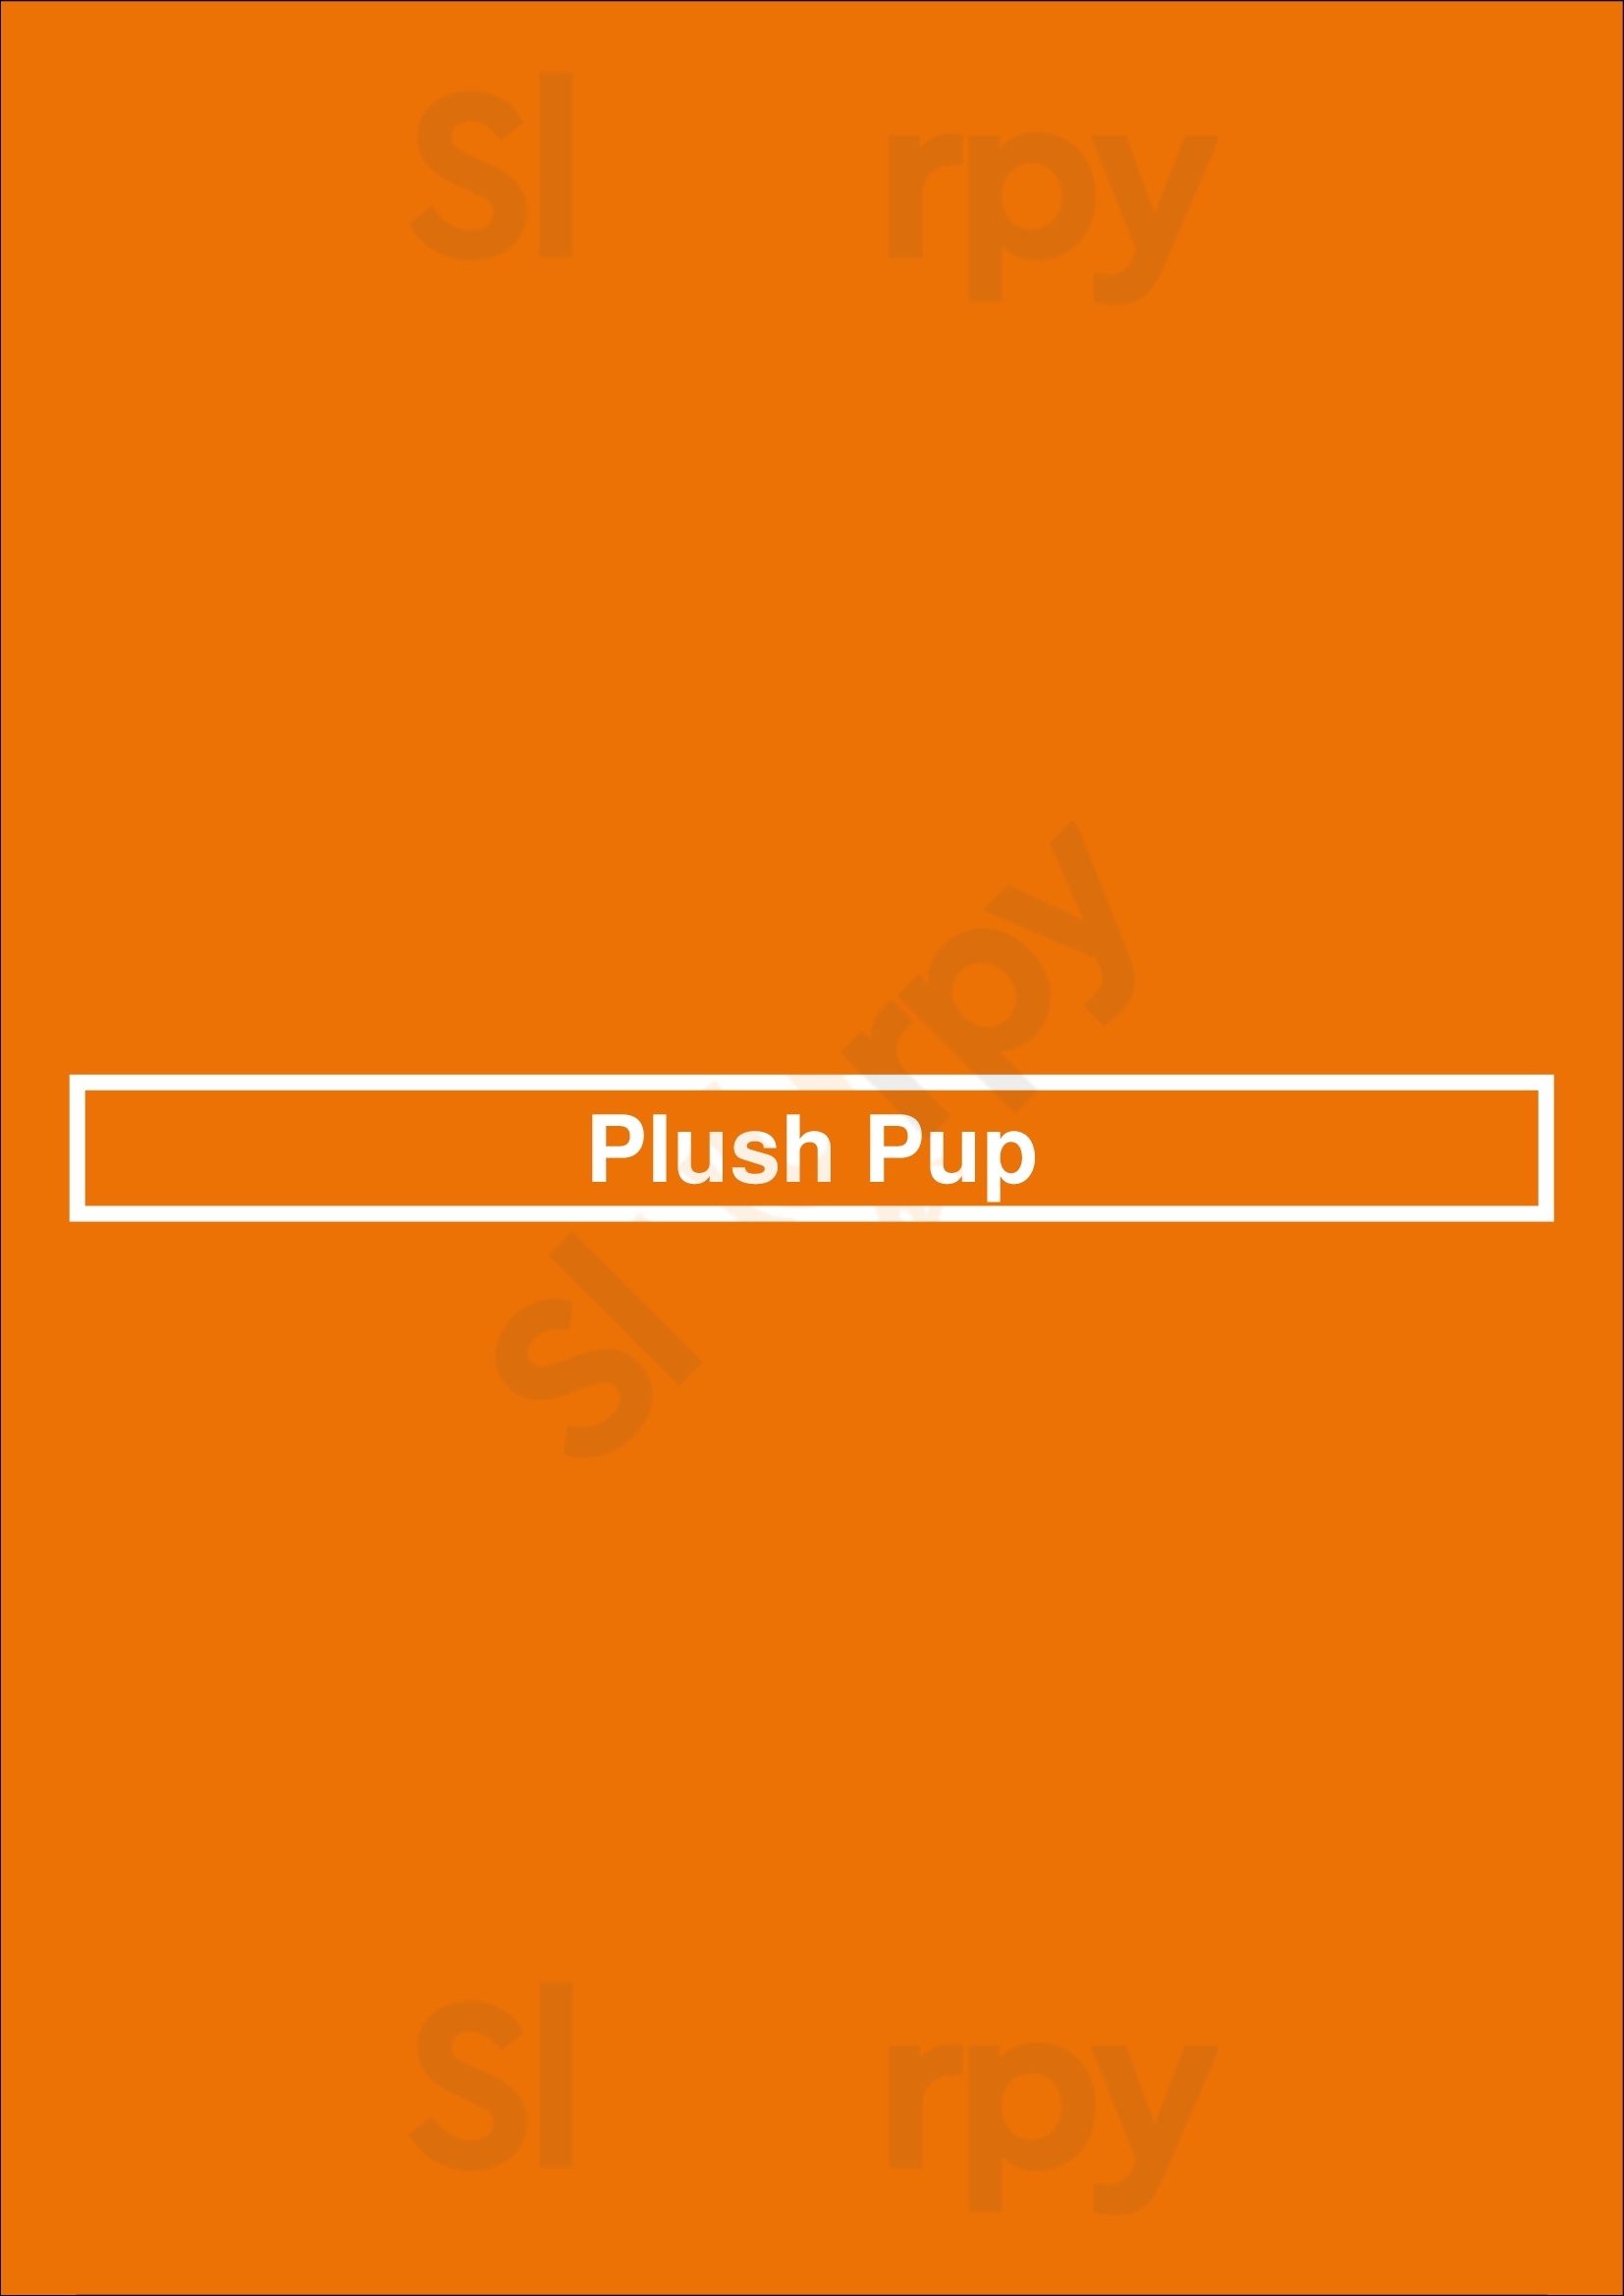 Plush Pup Chicago Menu - 1